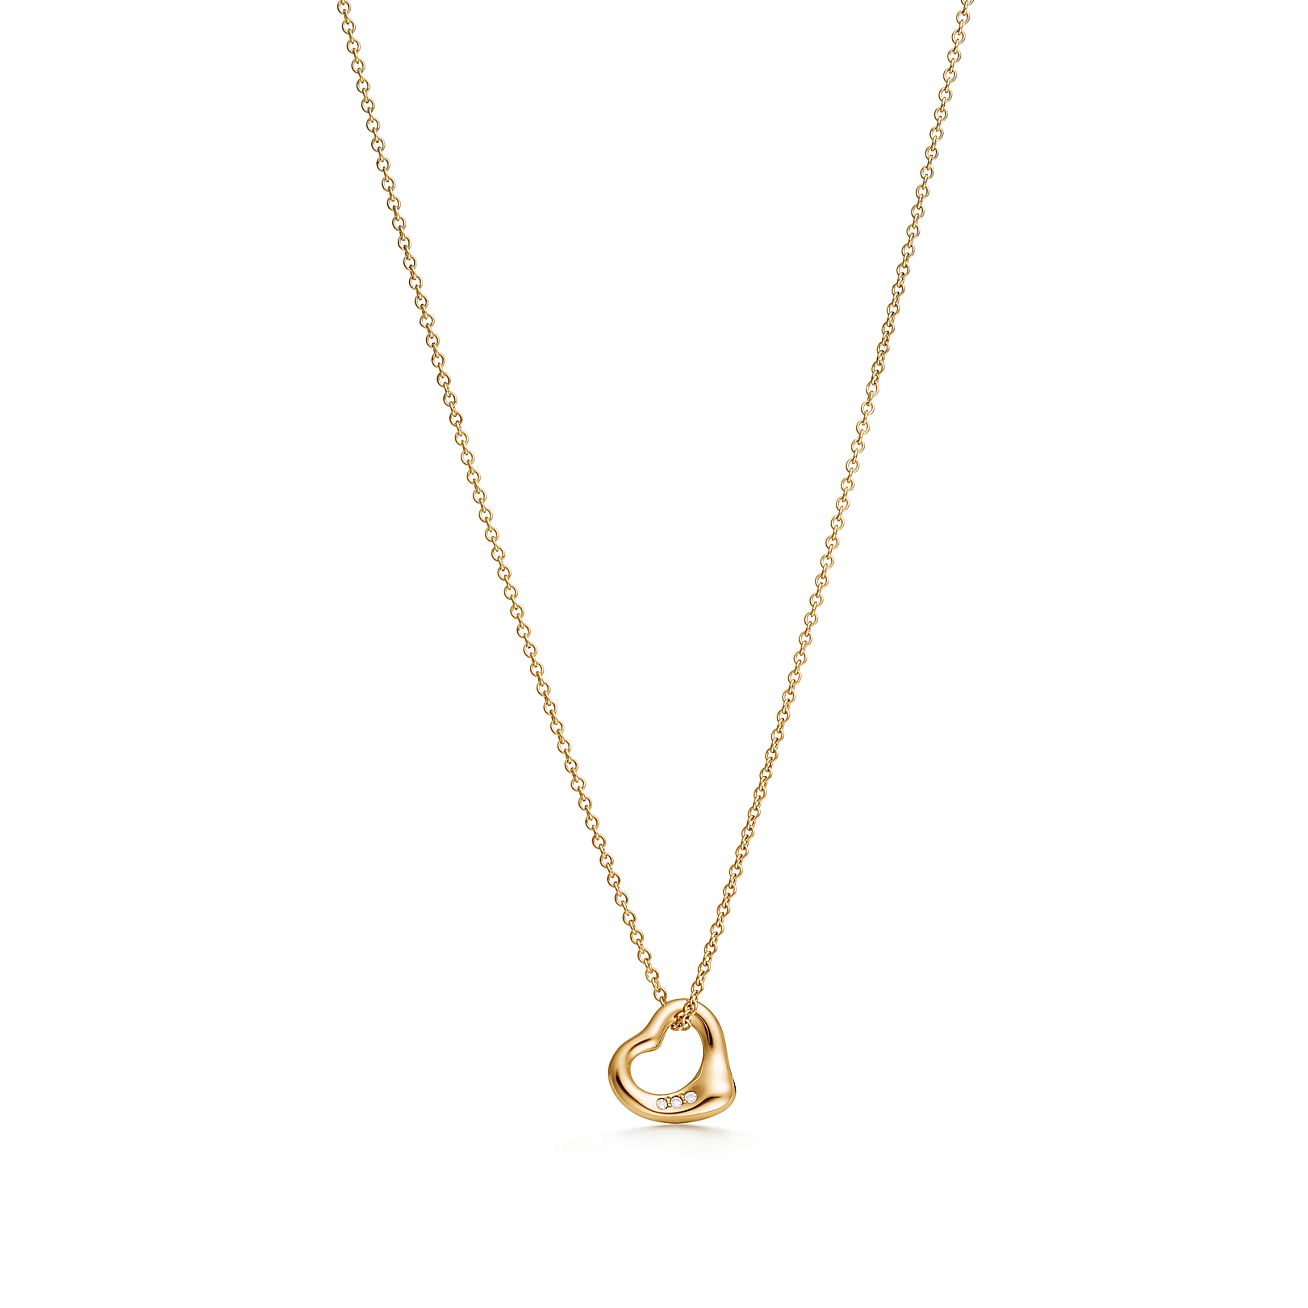 Elsa Peretti® Open Heart pendant in 18k gold with diamonds, 11 mm